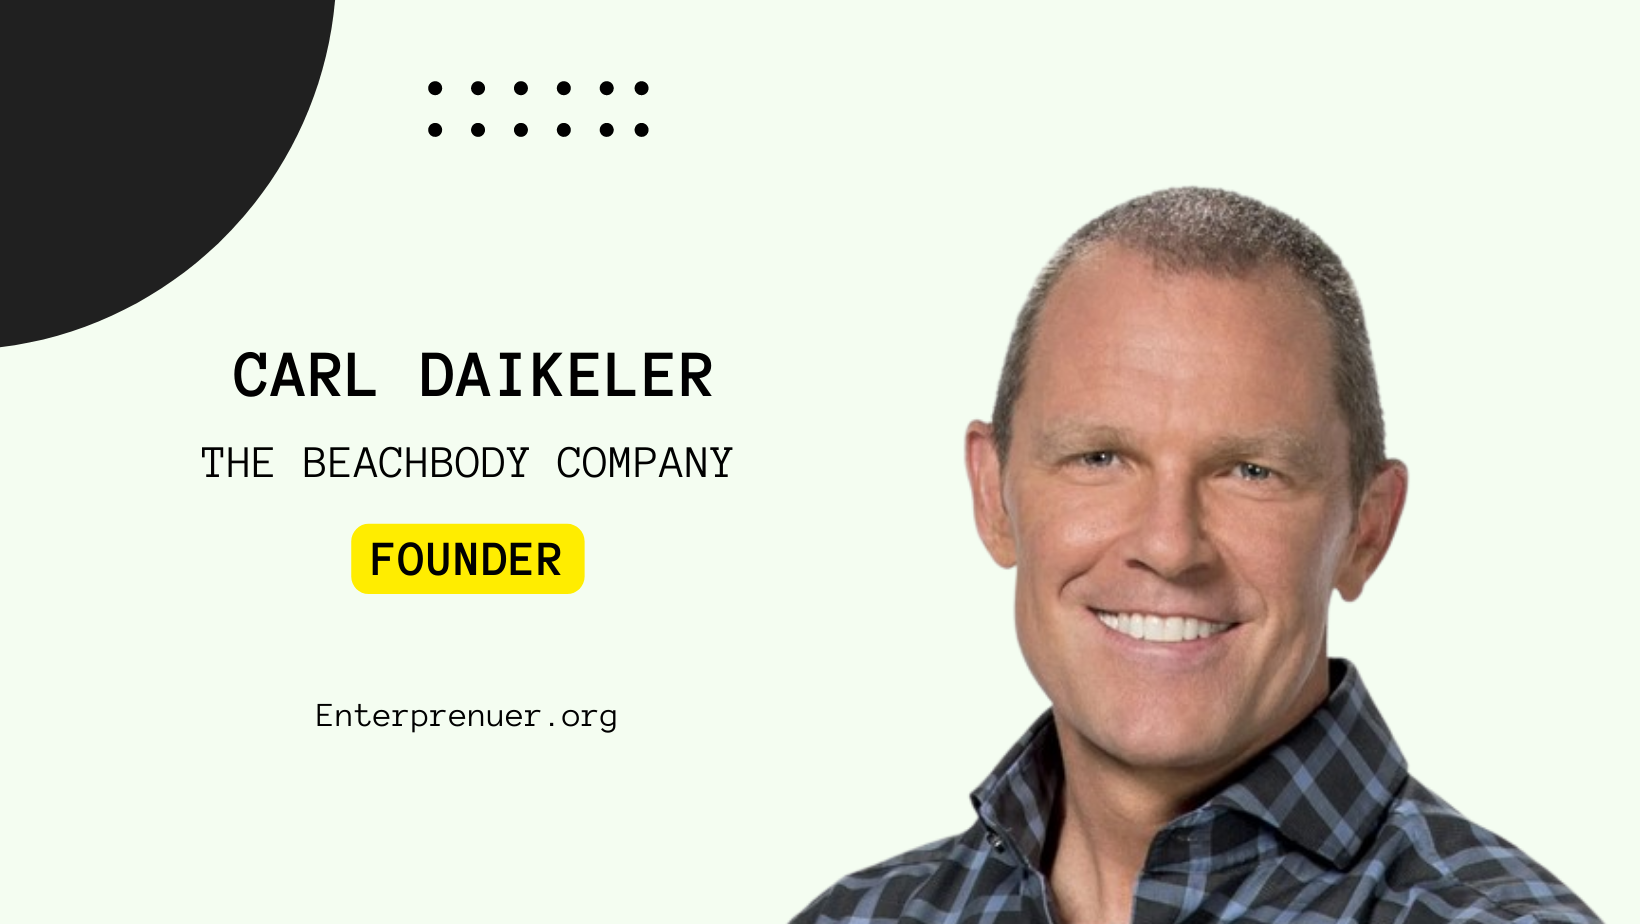 Carl Daikeler Co-Founder of The Beachbody Company